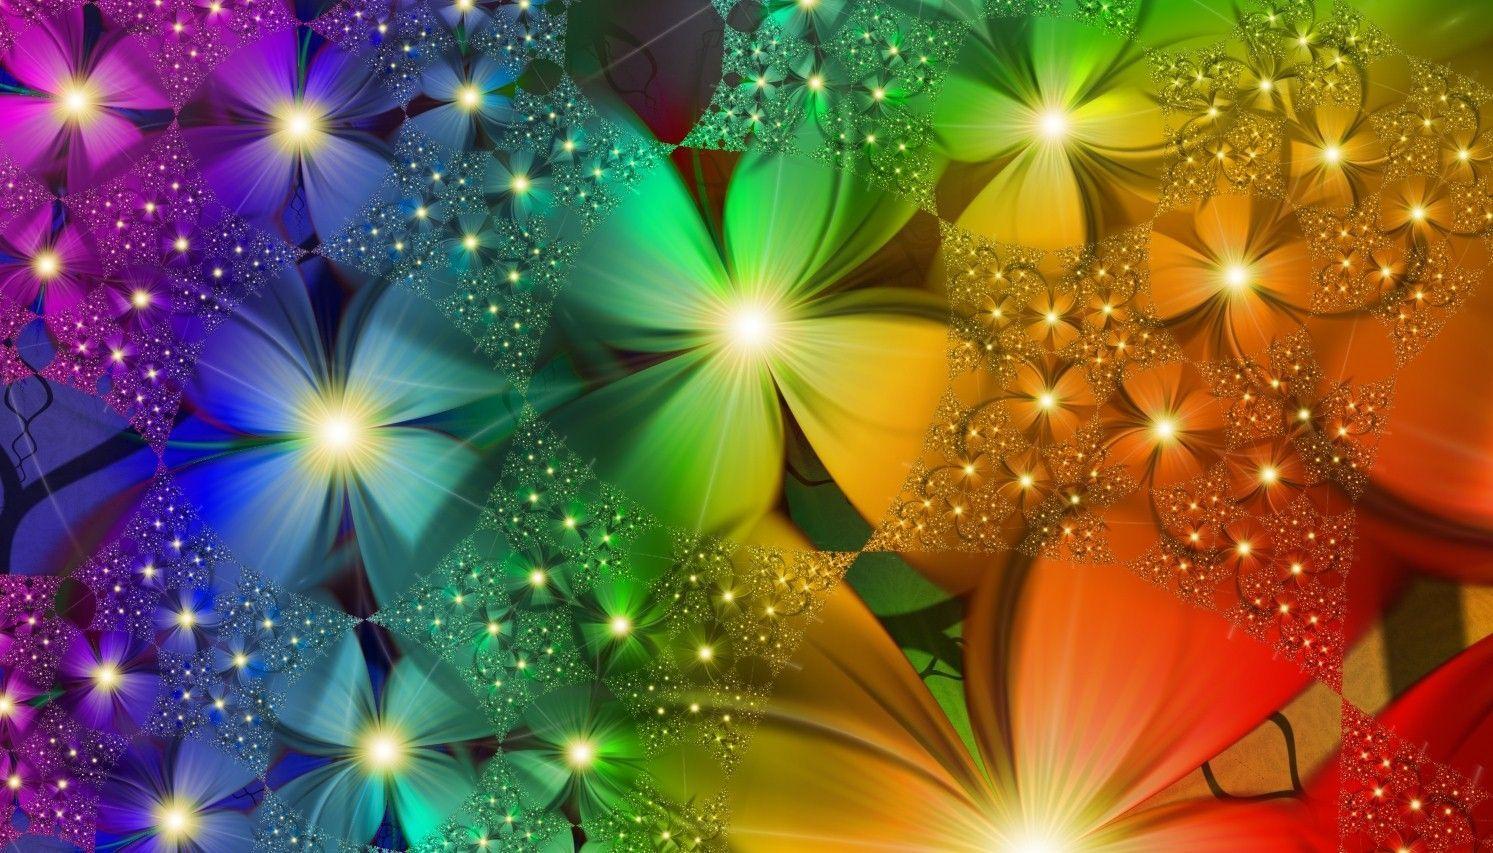 Rainbow Flowers desktop wallpaper beautiful gallery HD. High